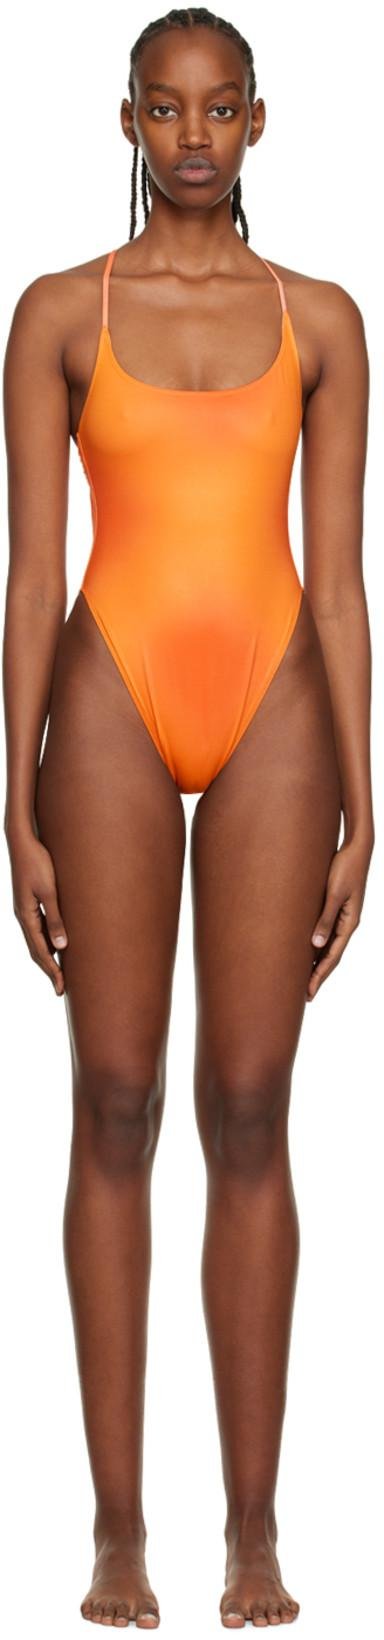 SSENSE Exclusive Orange Valkiria One-Piece Swimsuit by BINYA